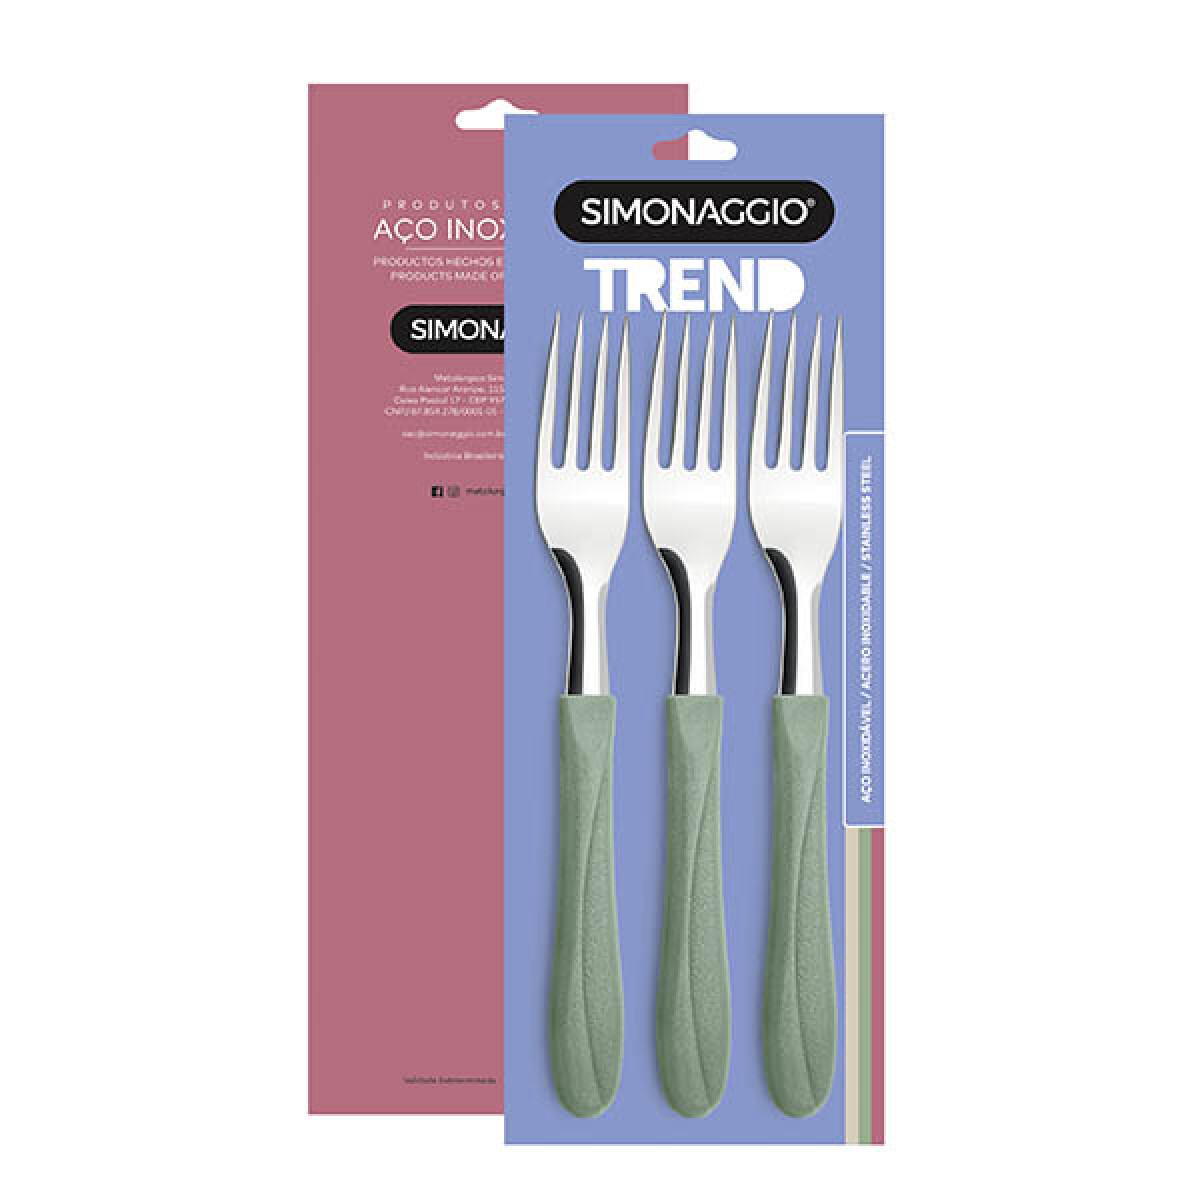 Set X3 Tenedores Trend de Simonaggio - Varios Colores - VERDE 